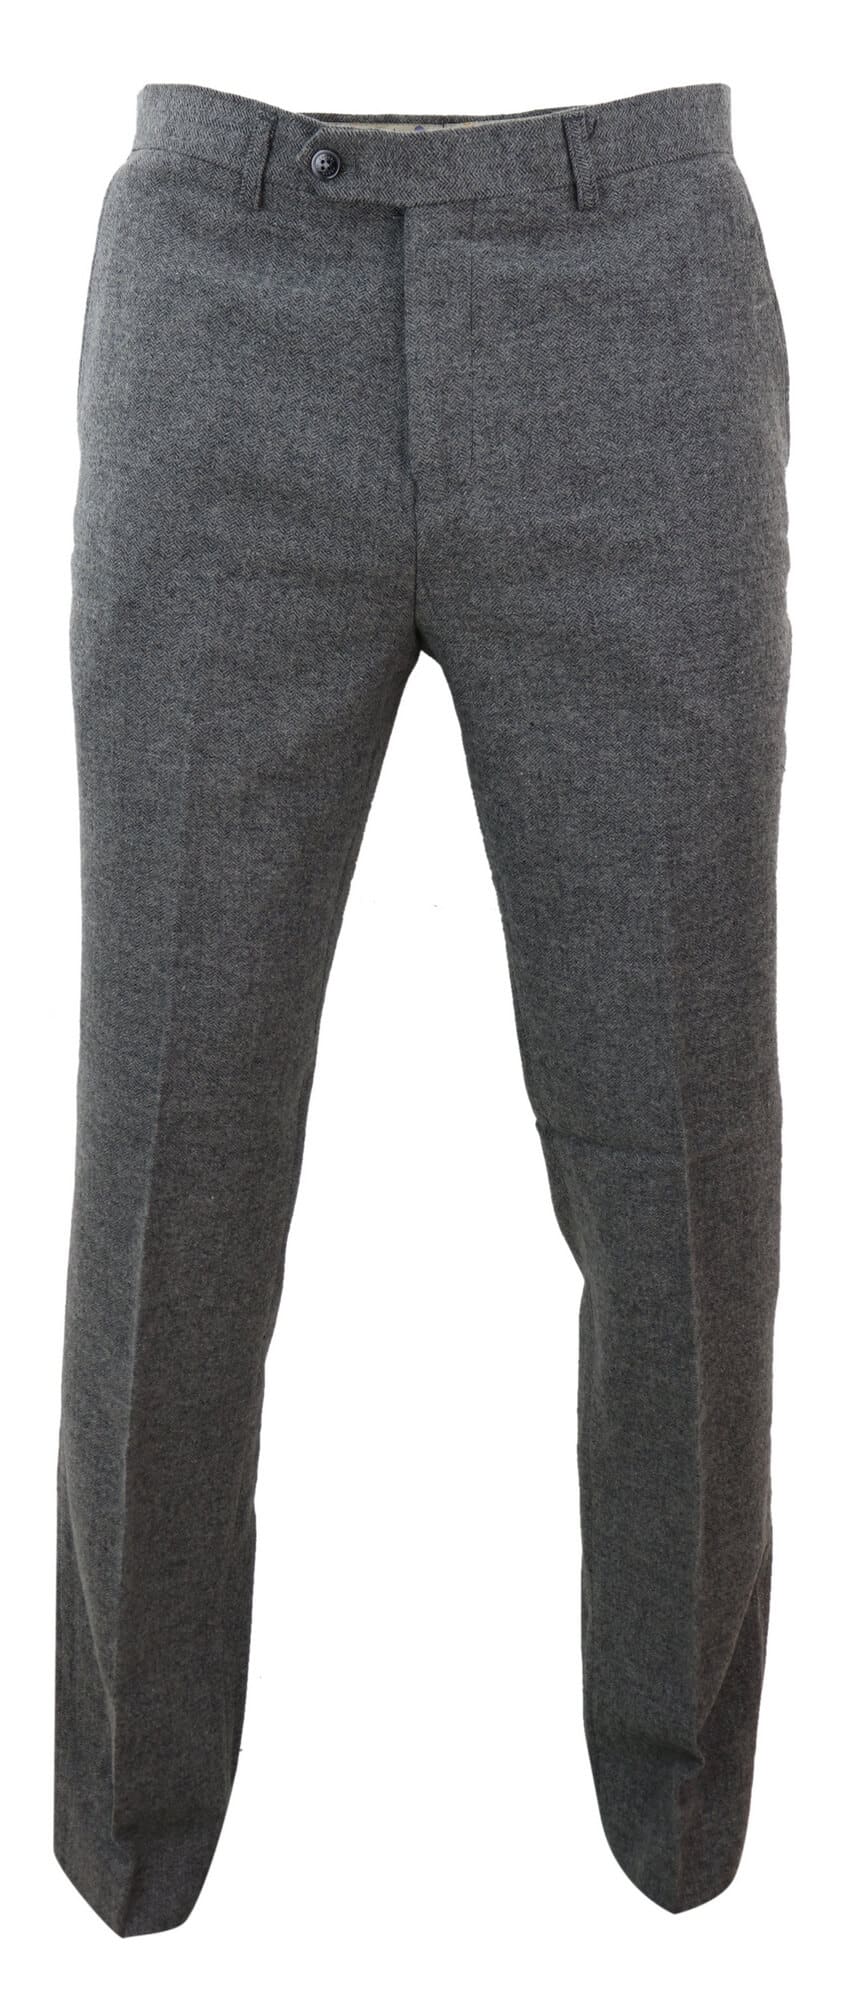 Slim Fit trousers - Dark grey marl - Men | H&M IN-vachngandaiphat.com.vn